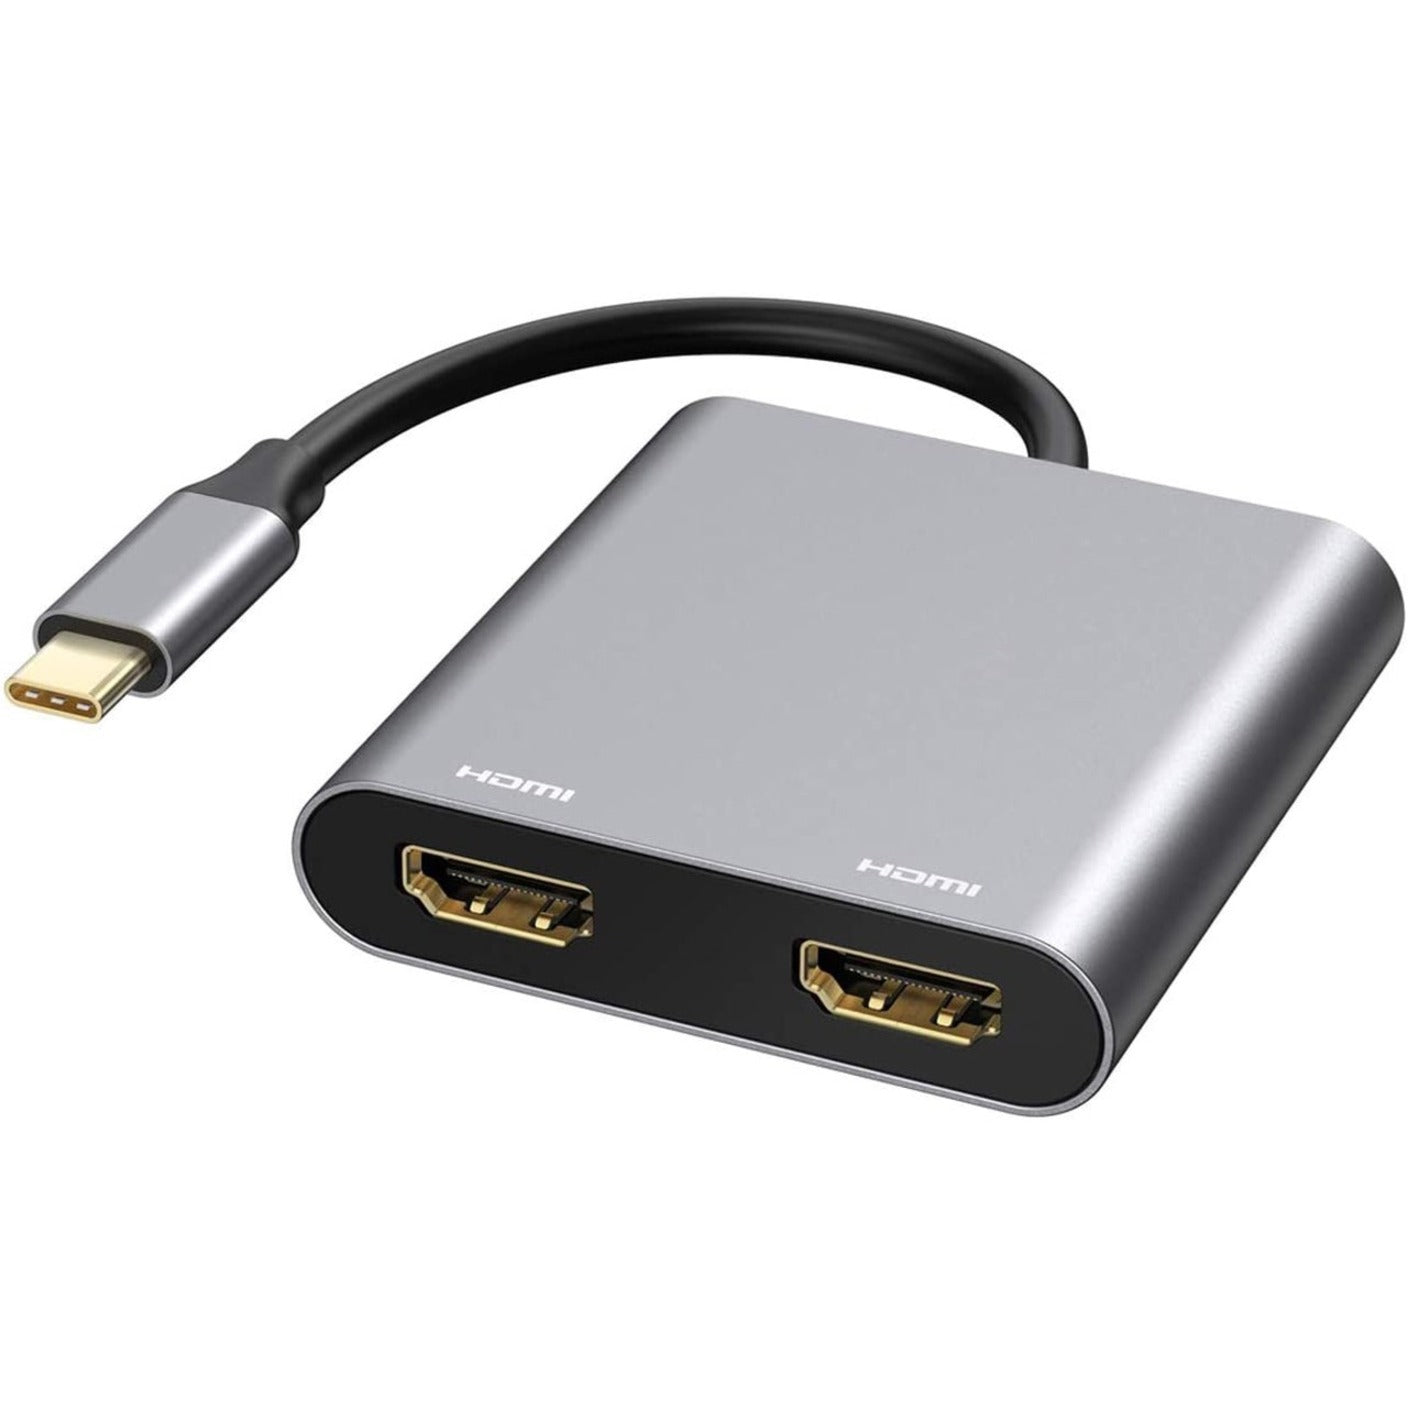 4XEM 4XUSBCHUB07 Dual HDMI USB-C Dock, 2 HDMI Outputs, 1 USB 3.0 Port, 100W Power Supply